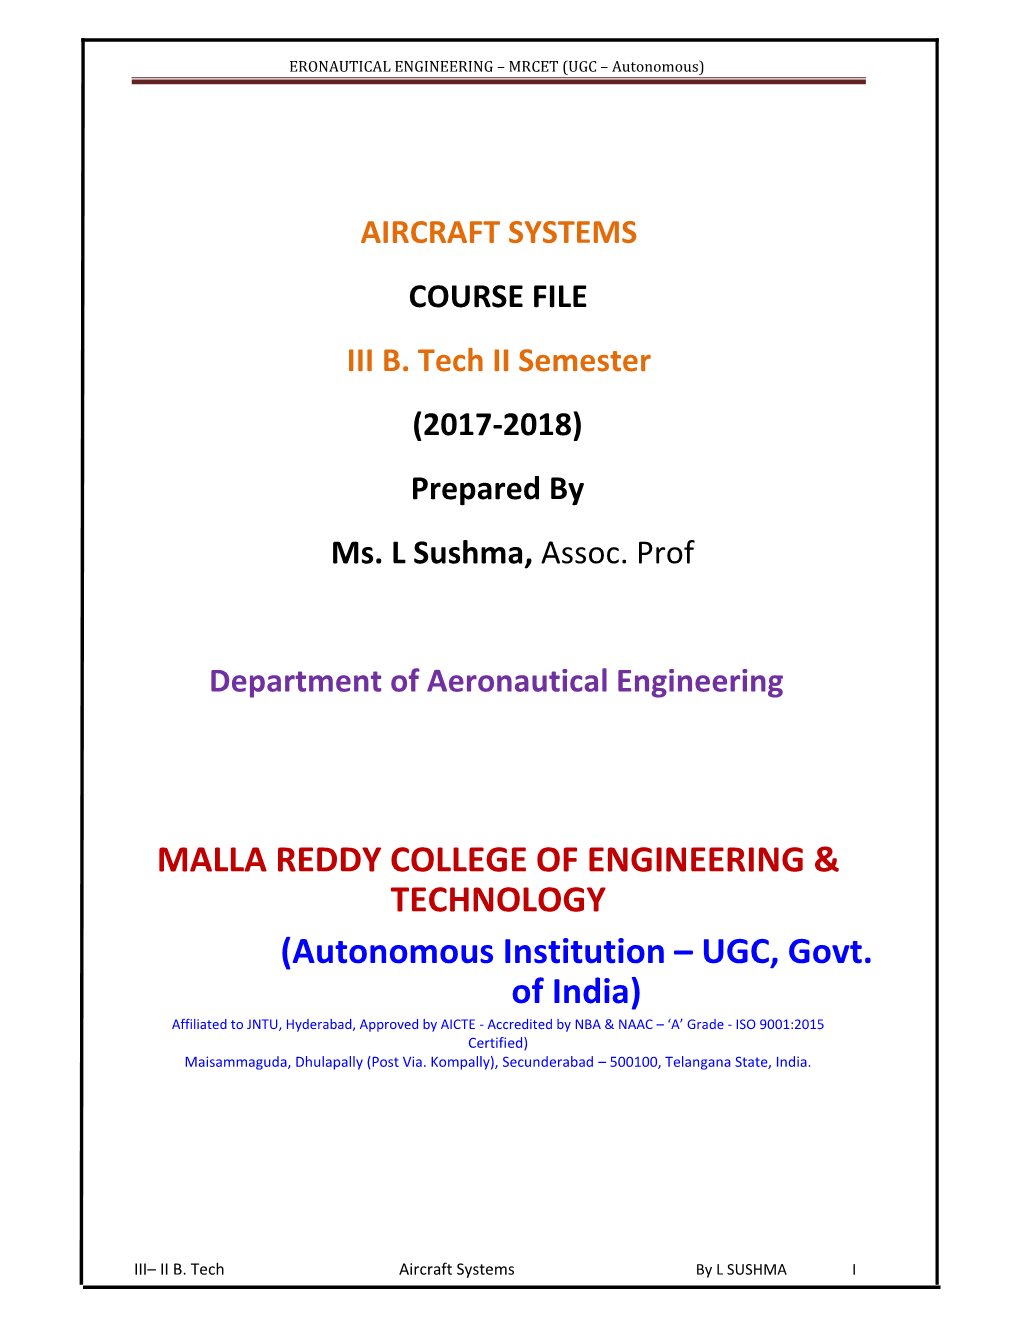 AIRCRAFT SYSTEMS COURSE FILE III B. Tech II Semester